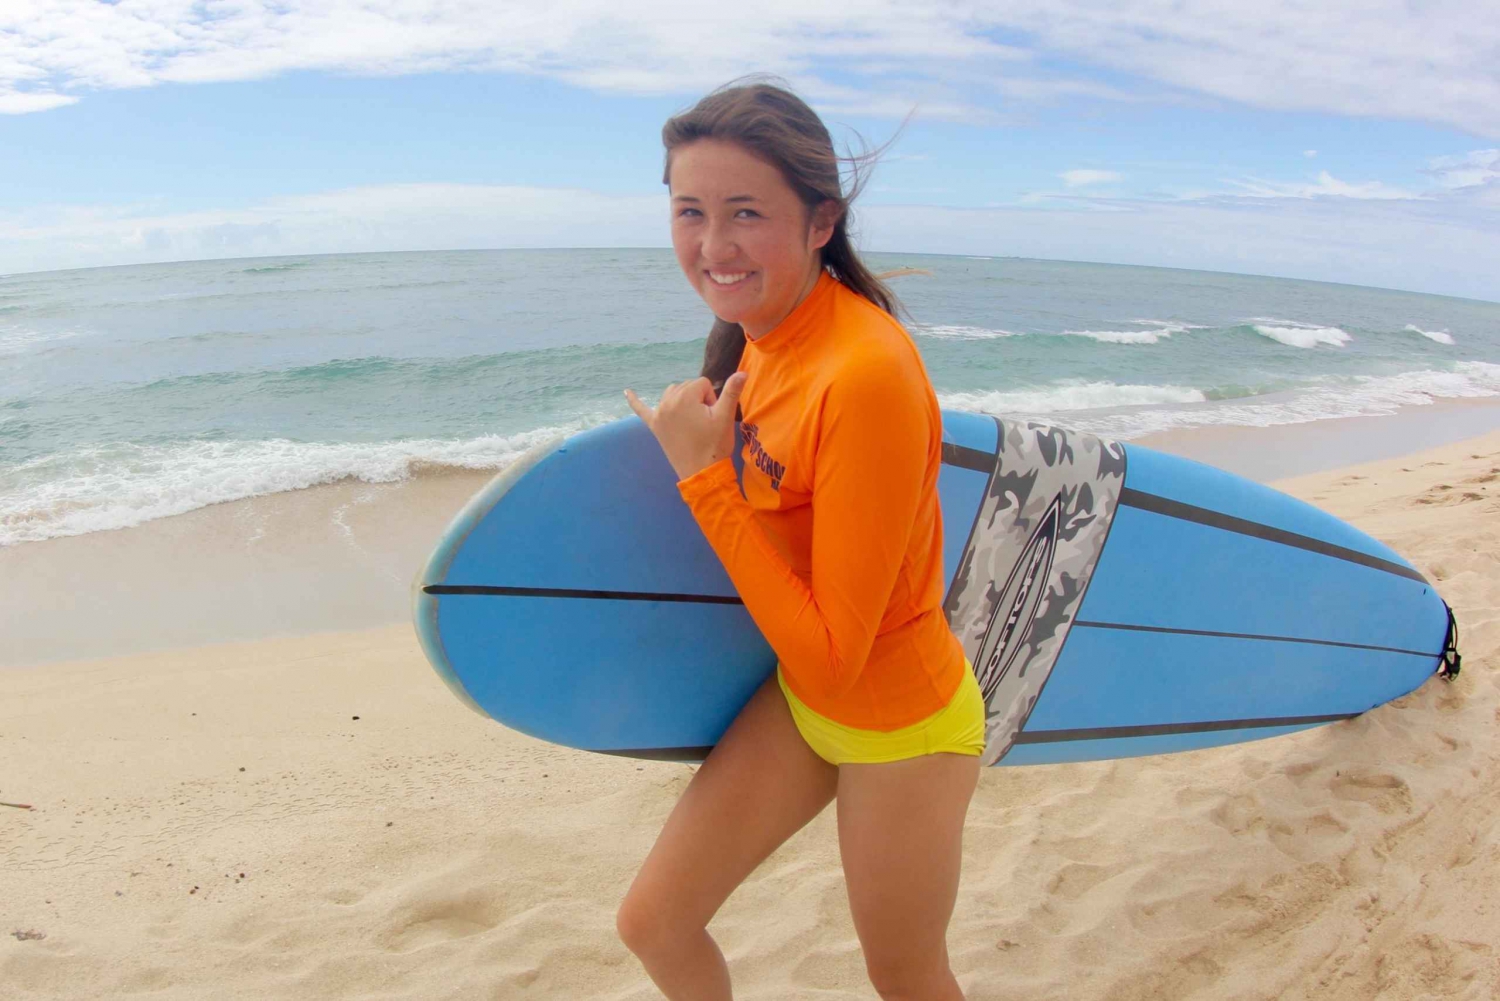 Oahu: Waikiki 2-Hour Semi-Private Surfing Lesson